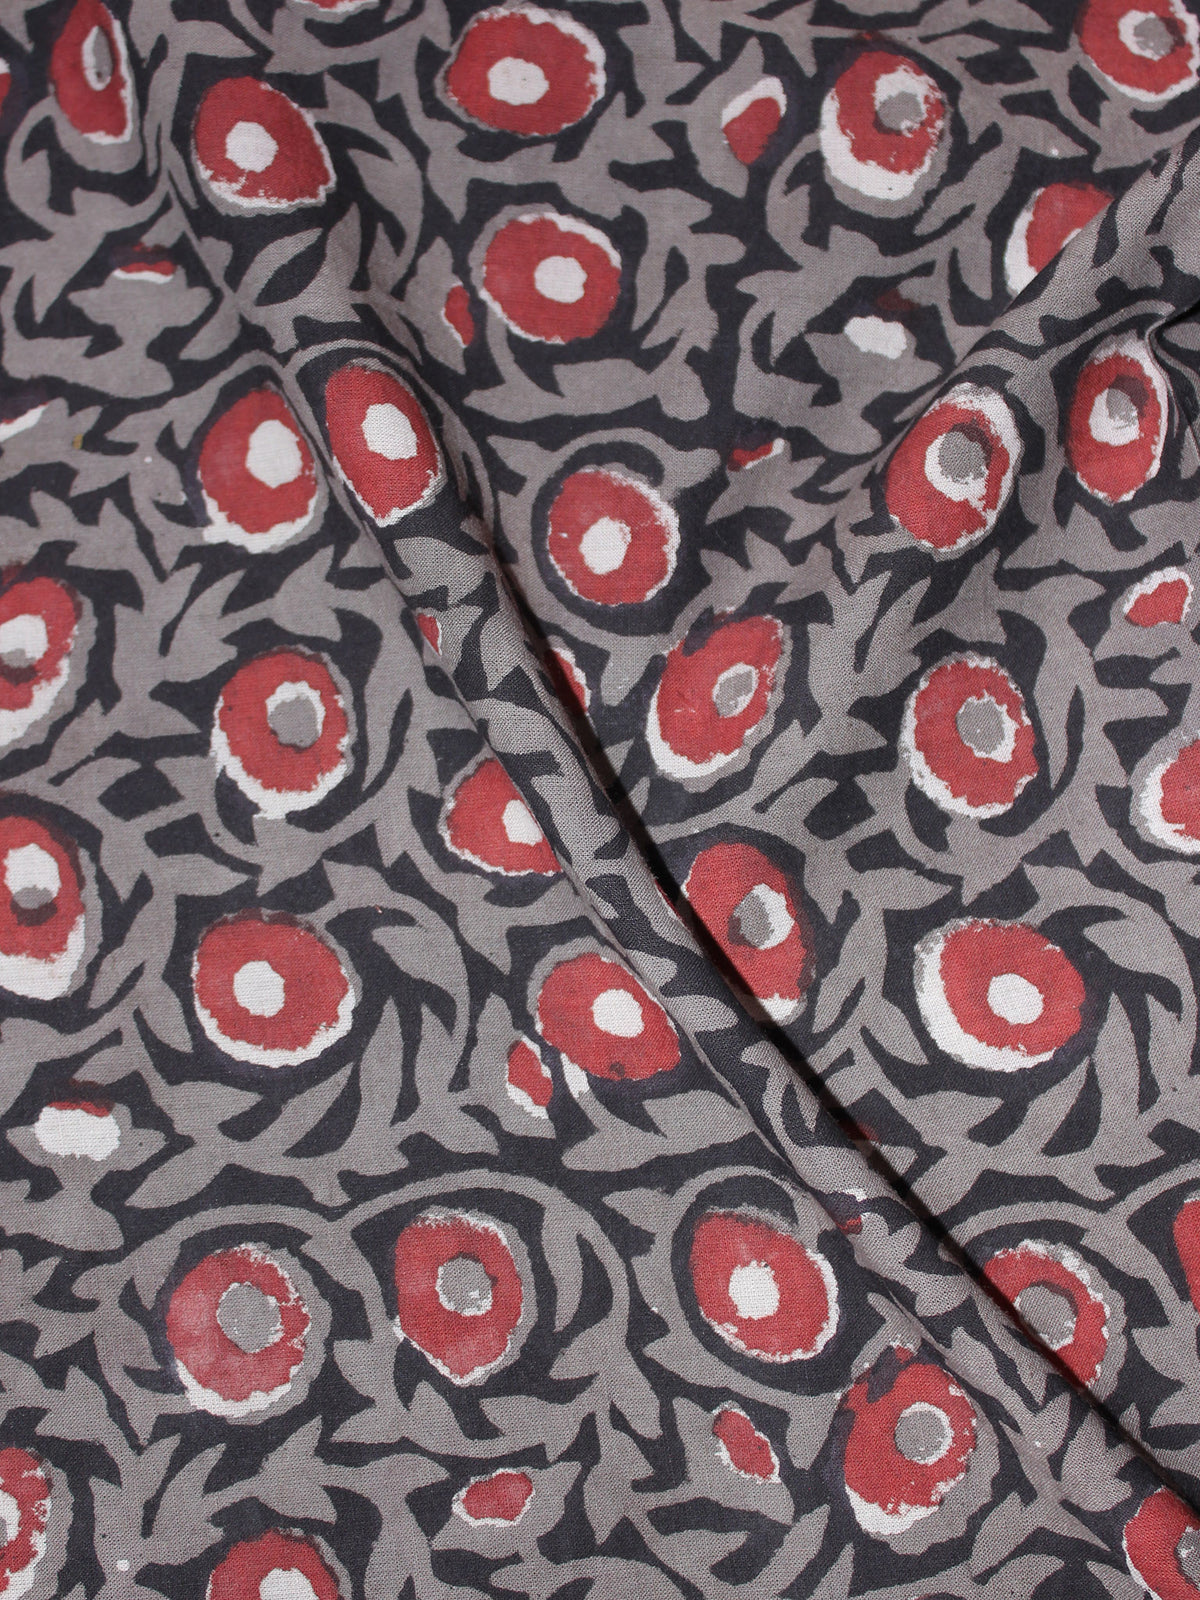 Black Grey Red Hand Block Printed Cotton Cambric Fabric Per Meter - F0916434